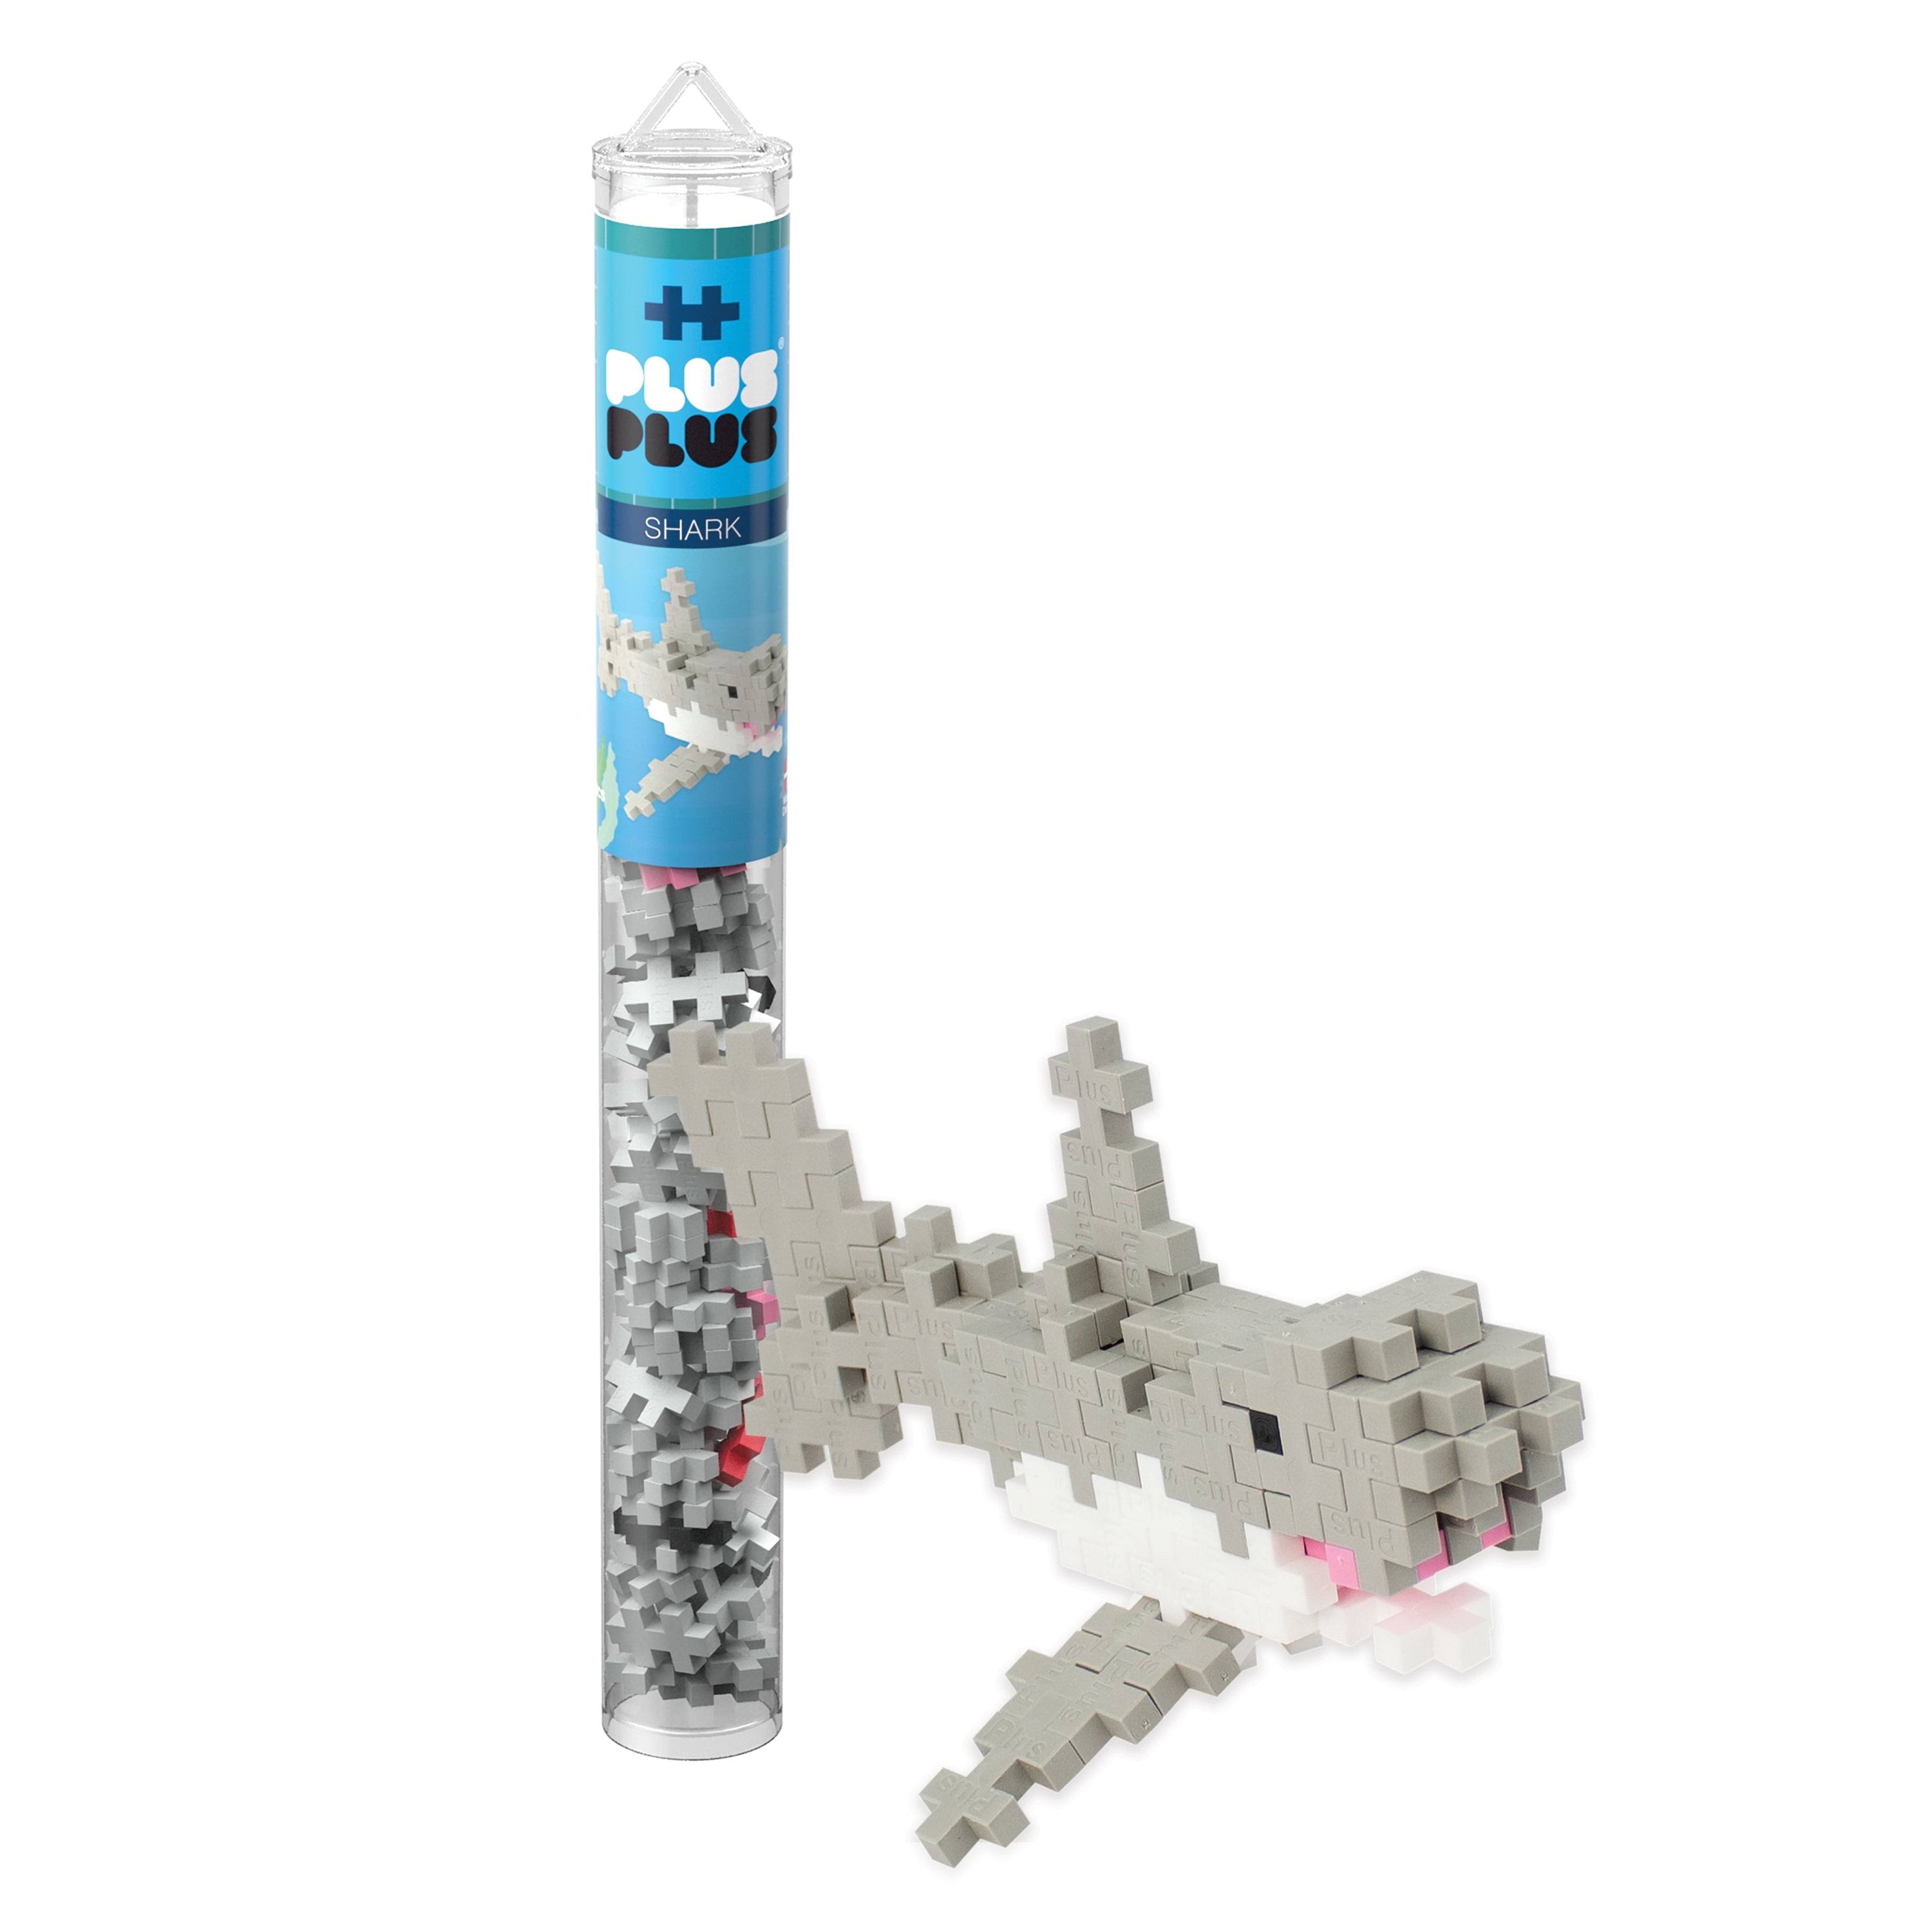 Plus Plus - Shark - 70 Piece, Construction Building Stem/Steam Toy, Interlocking Puzzle Blocks For Kids, Mini Maker Tube